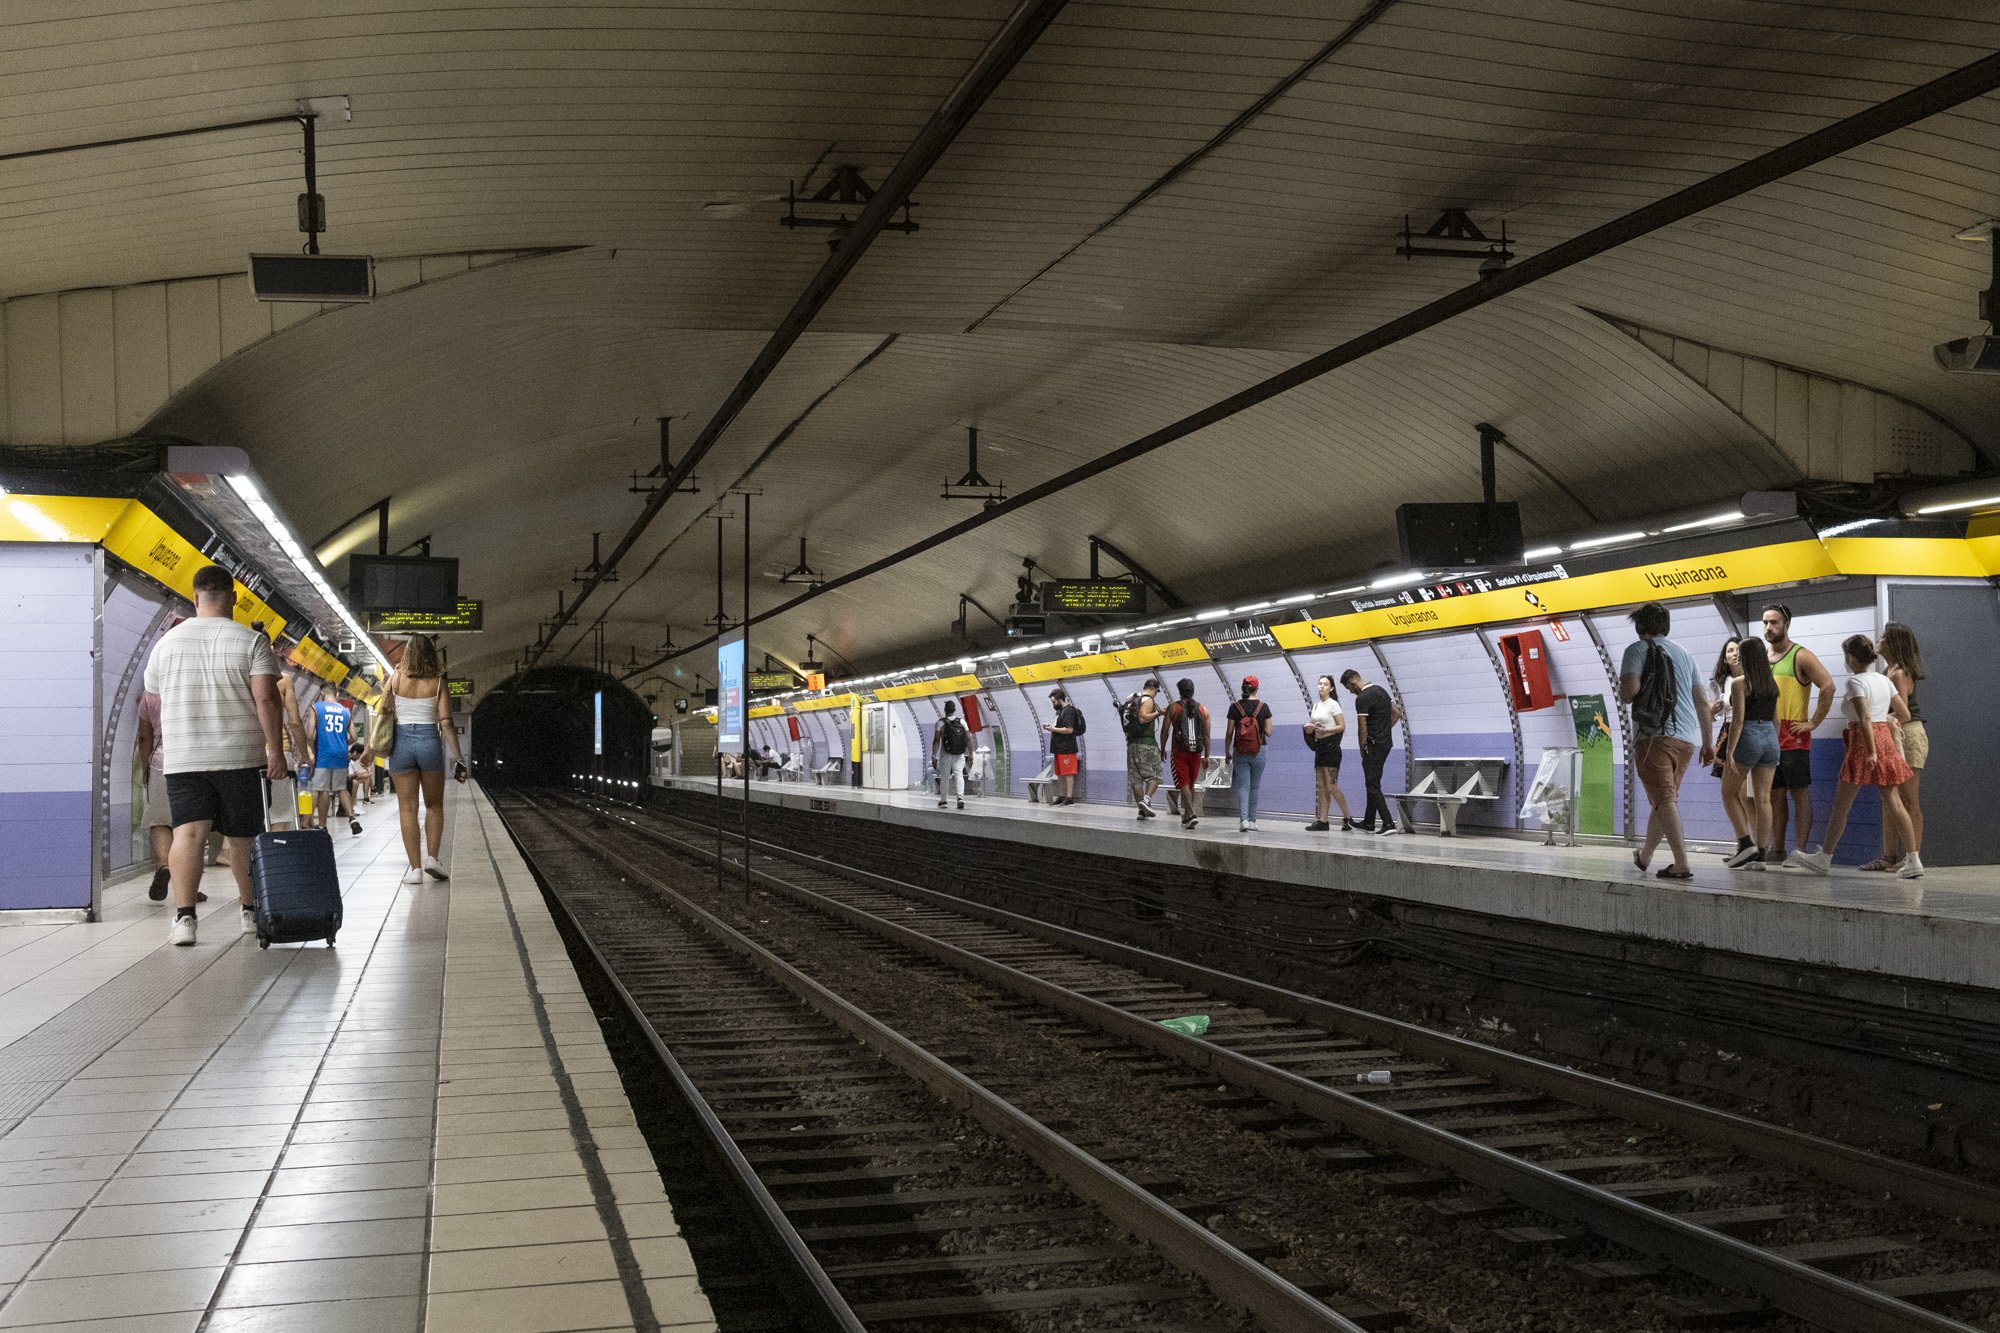 TMB, metro, L4, anden, Urquinaona / Foto: Carlos Baglietto